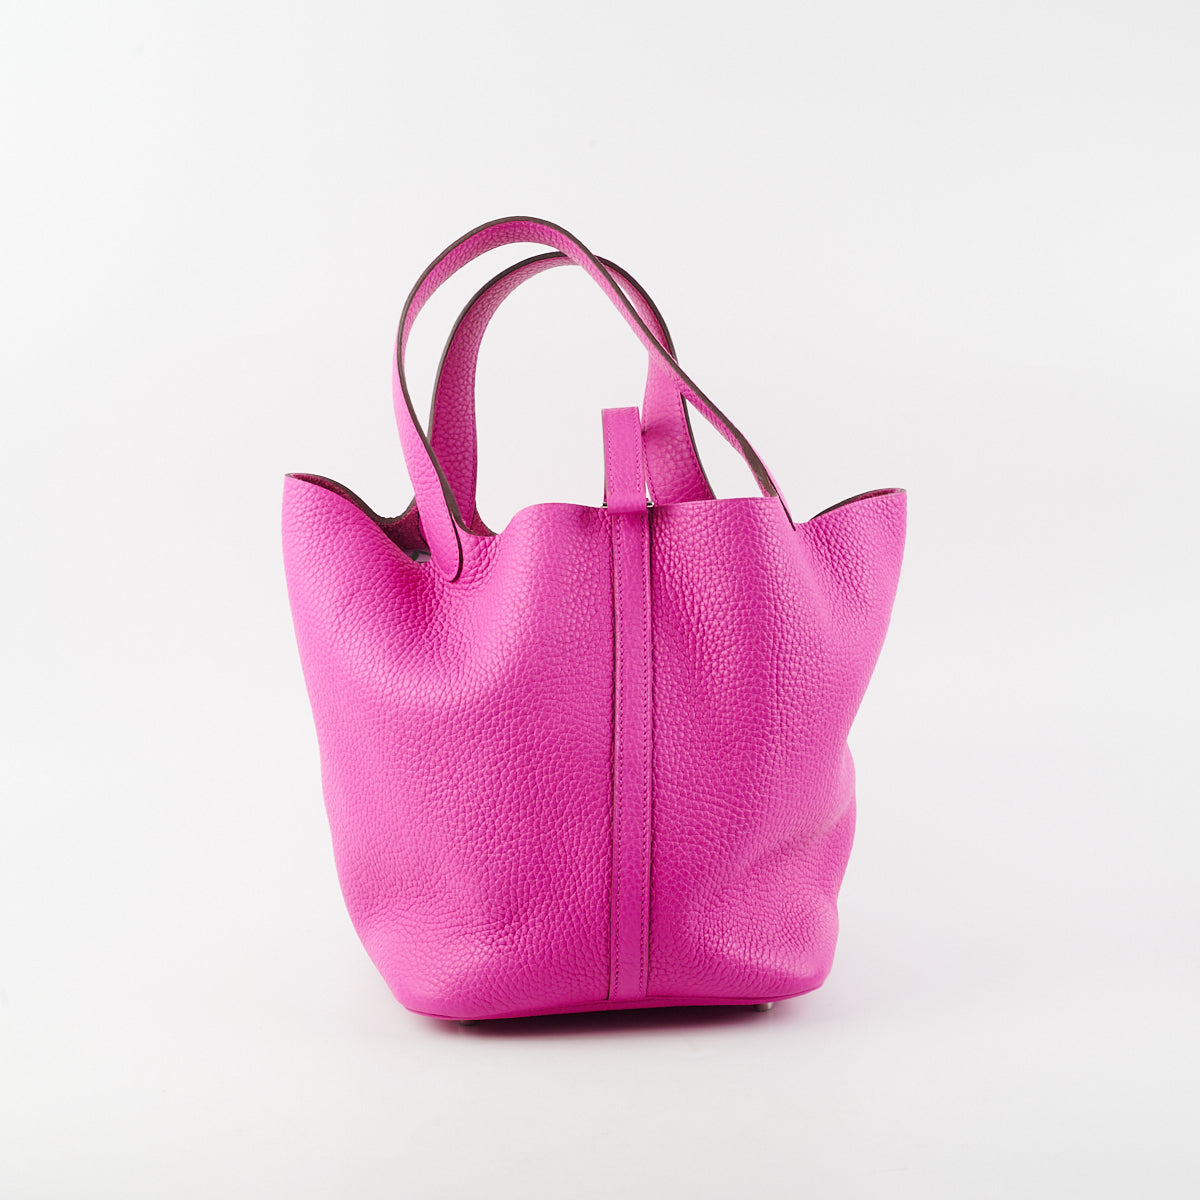 Shop HERMES Picotin Lock Elegant Style Handbags by LifeinParis